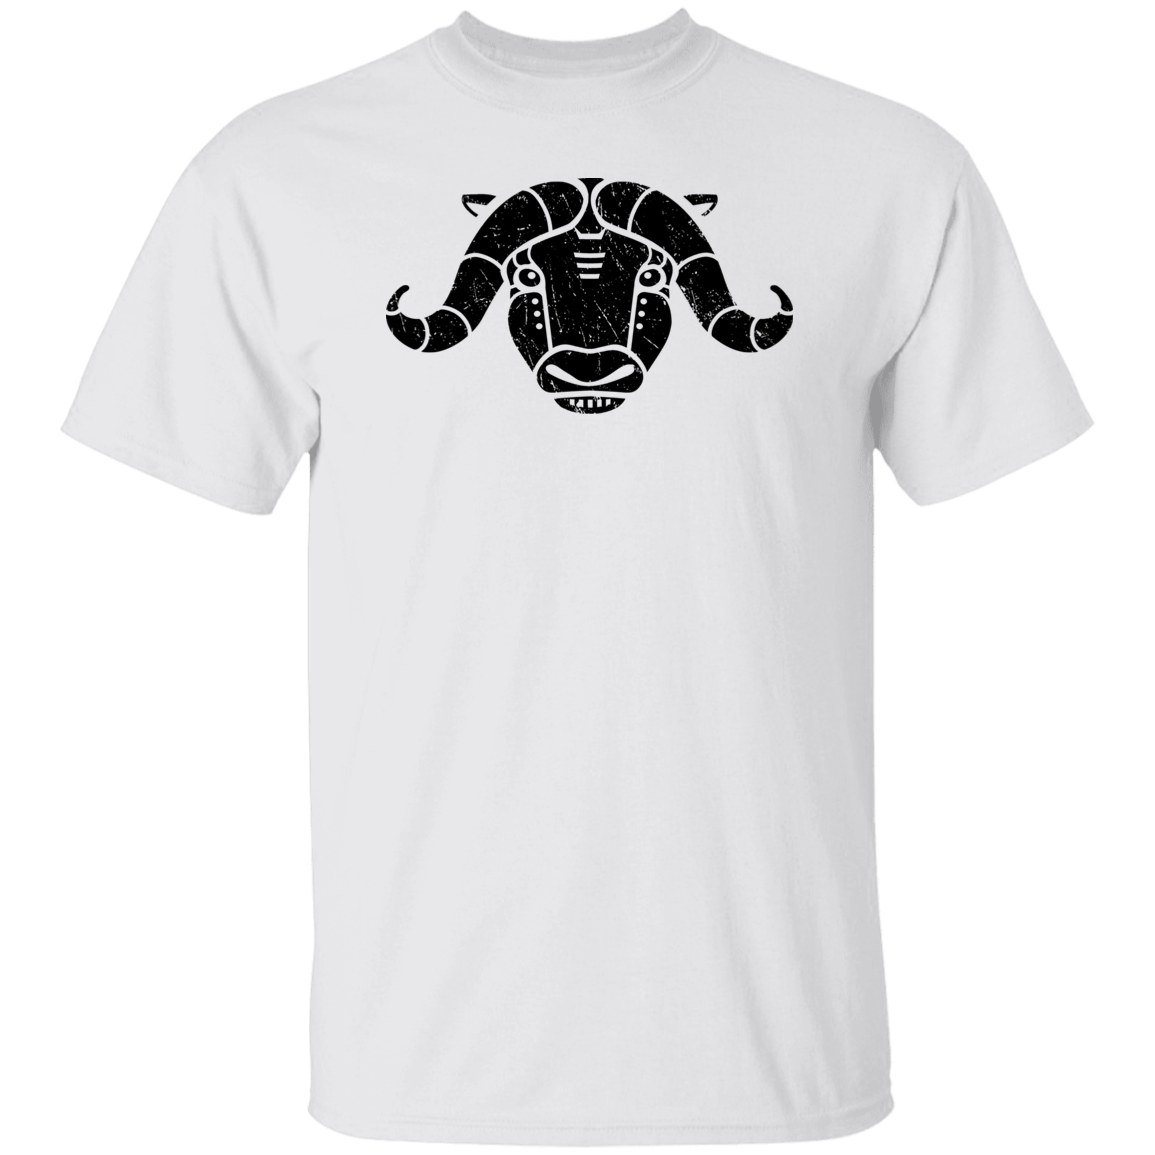 Black Distressed Emblem T-Shirt for Kids (Musk Ox/Moxie)